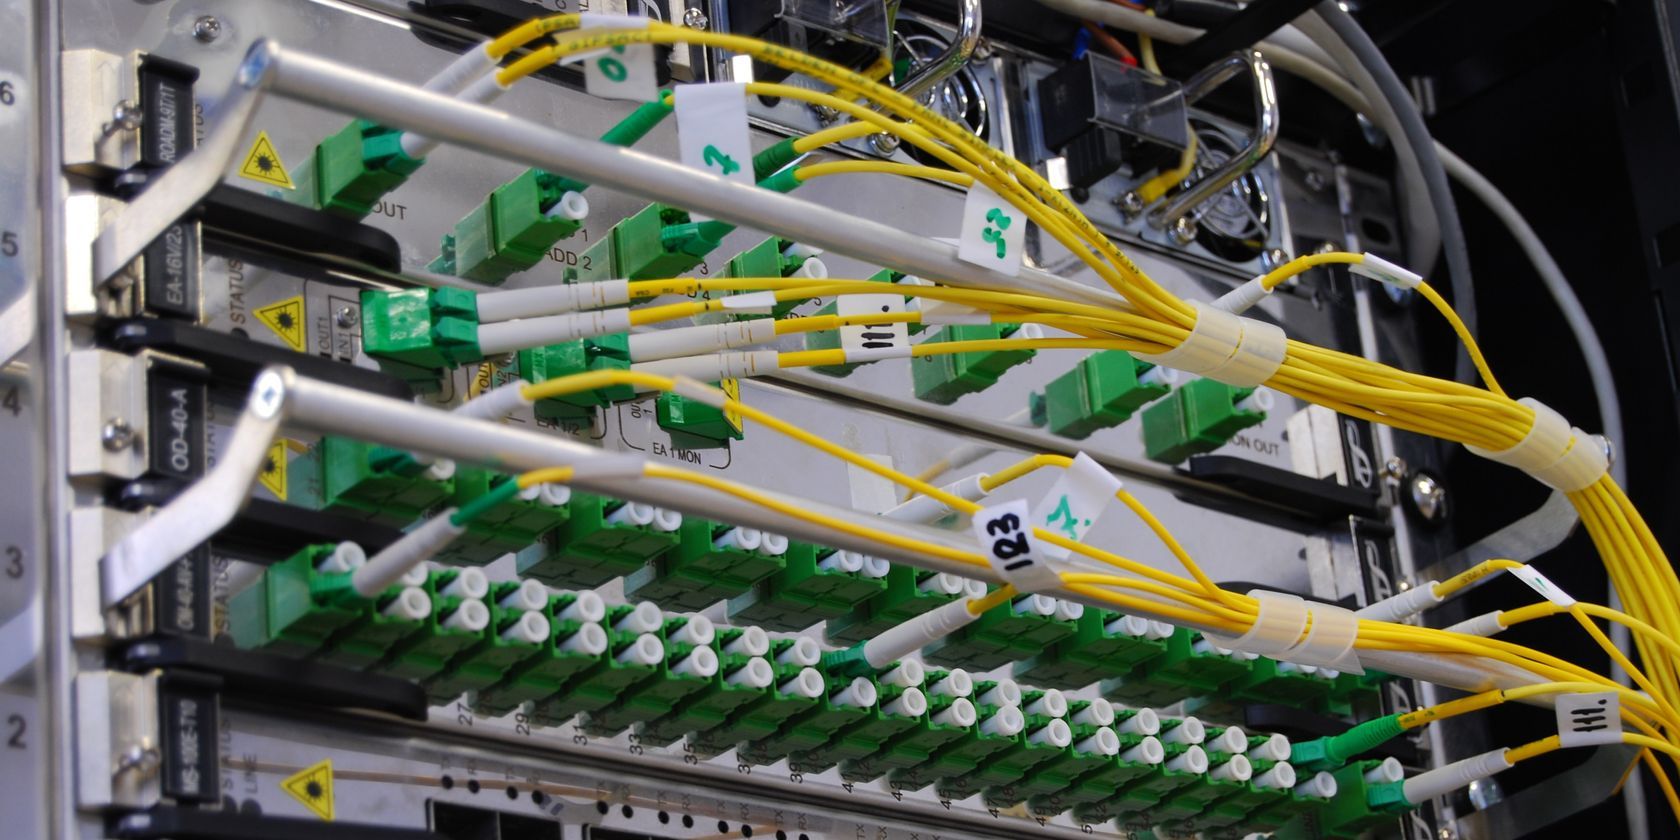 Fiber Optic Cabling on Server